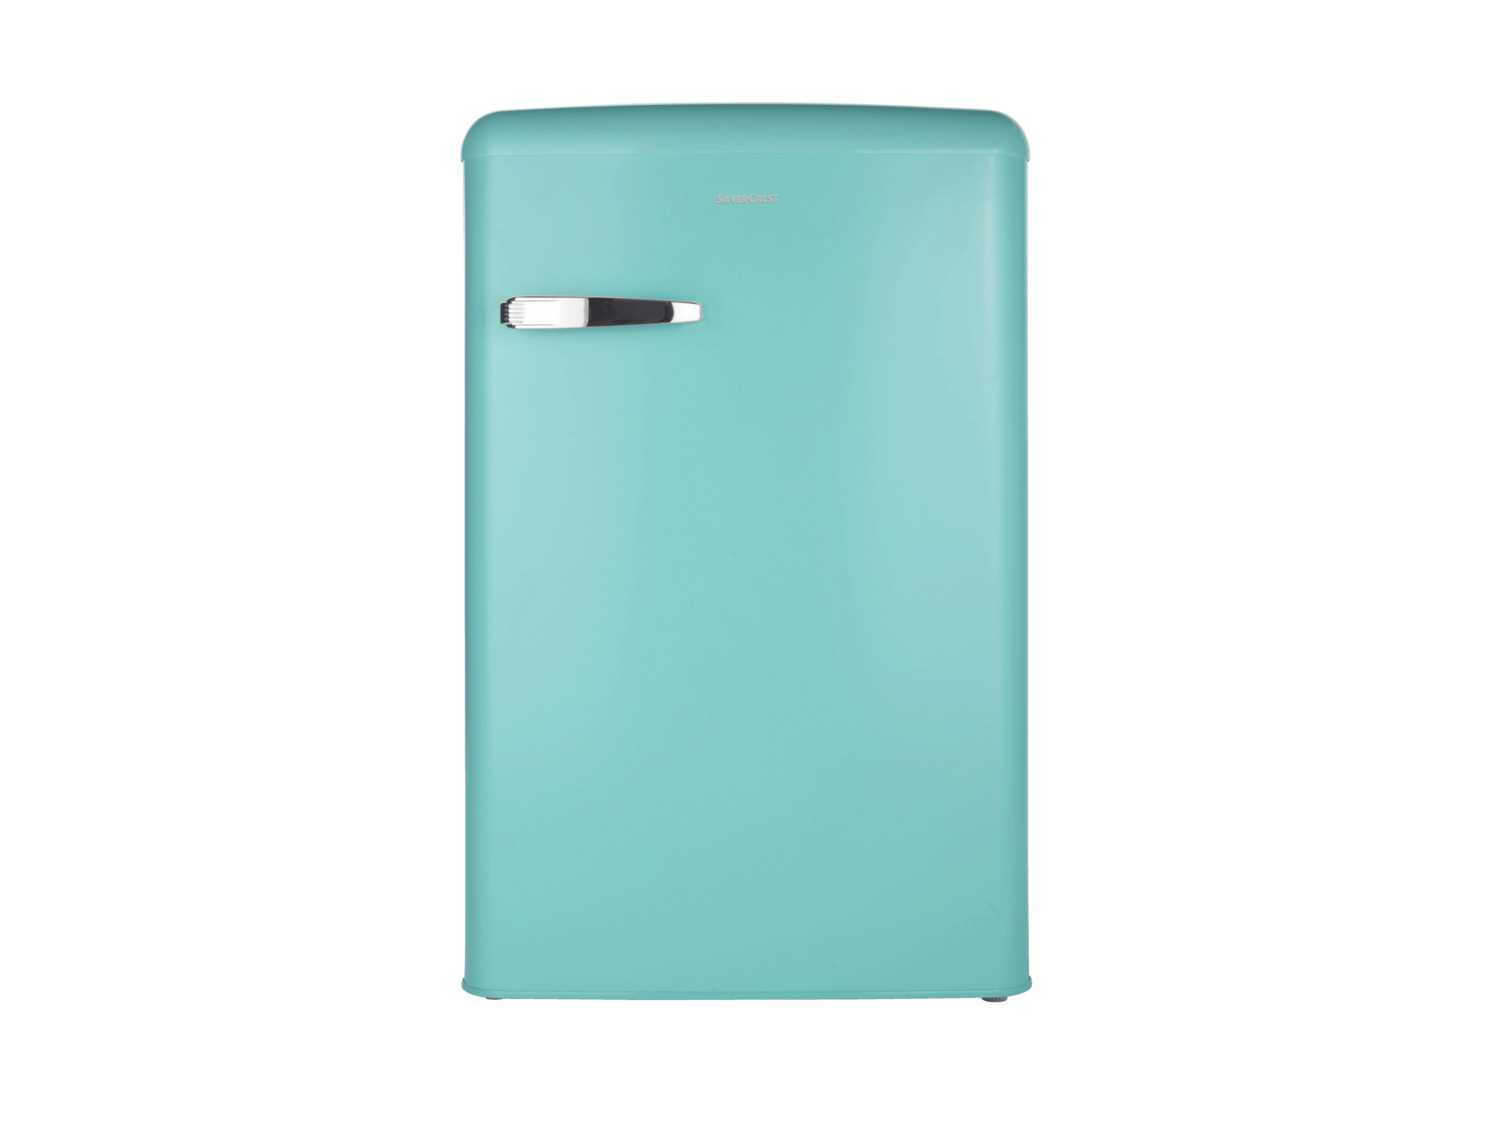 Lidl-koelkast-mint-retro-SilverCrest-pastels-keukenapparatuurs-koelkast